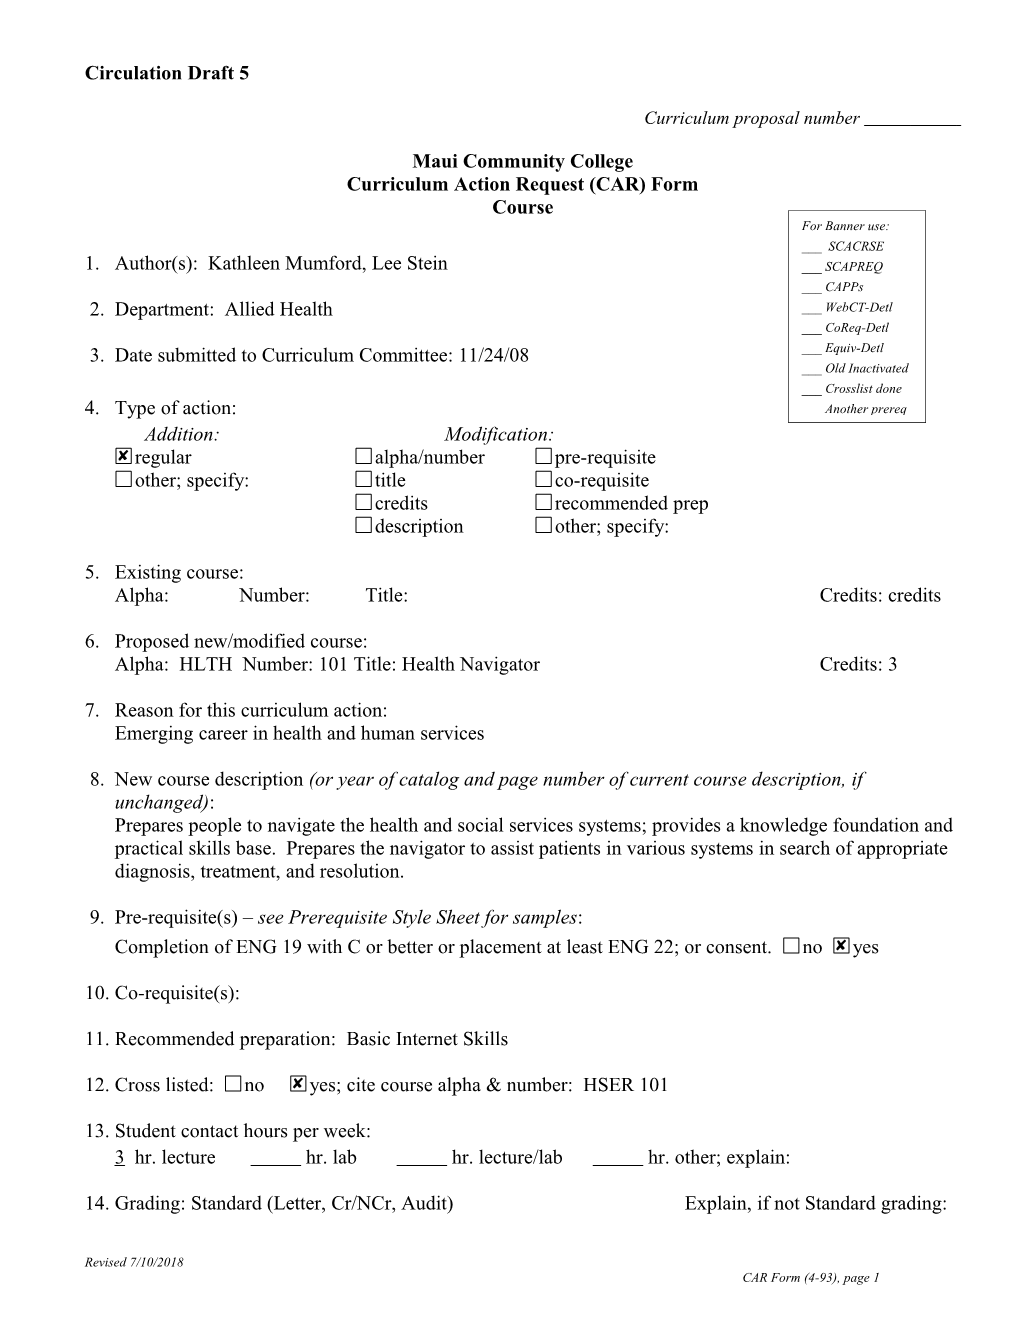 Curriculum Proposal Number 2008 s2